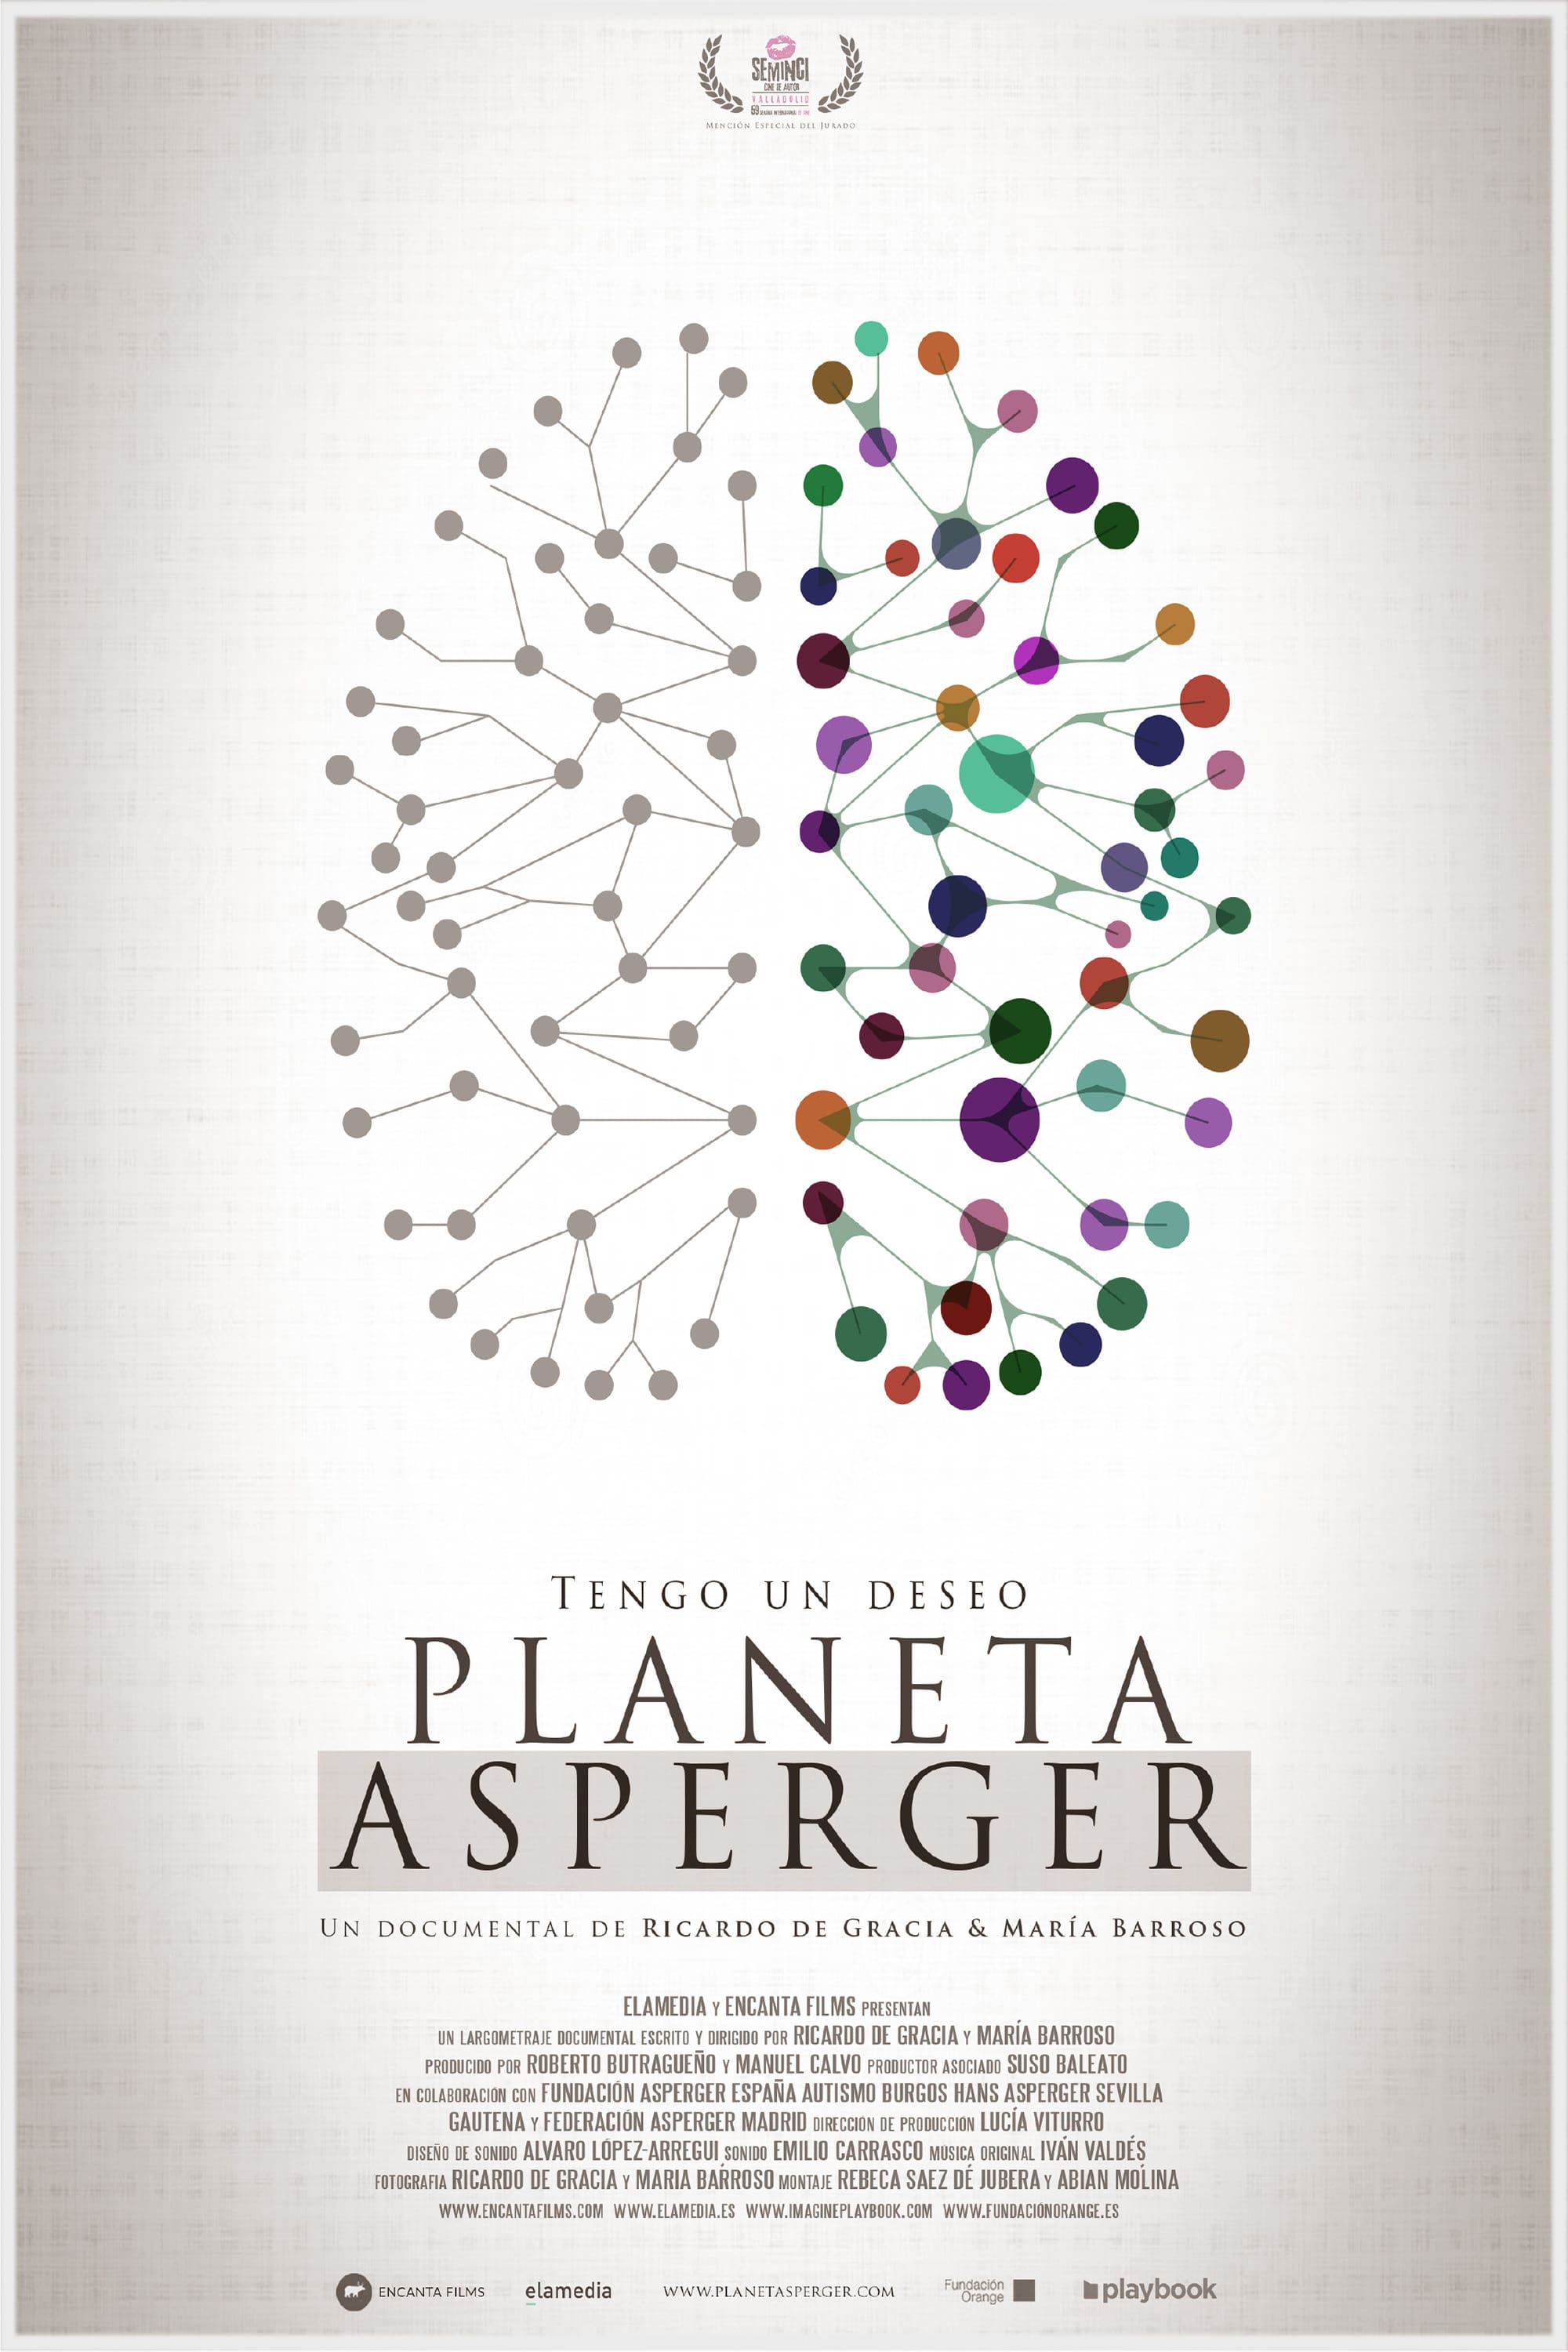 Planet Asperger